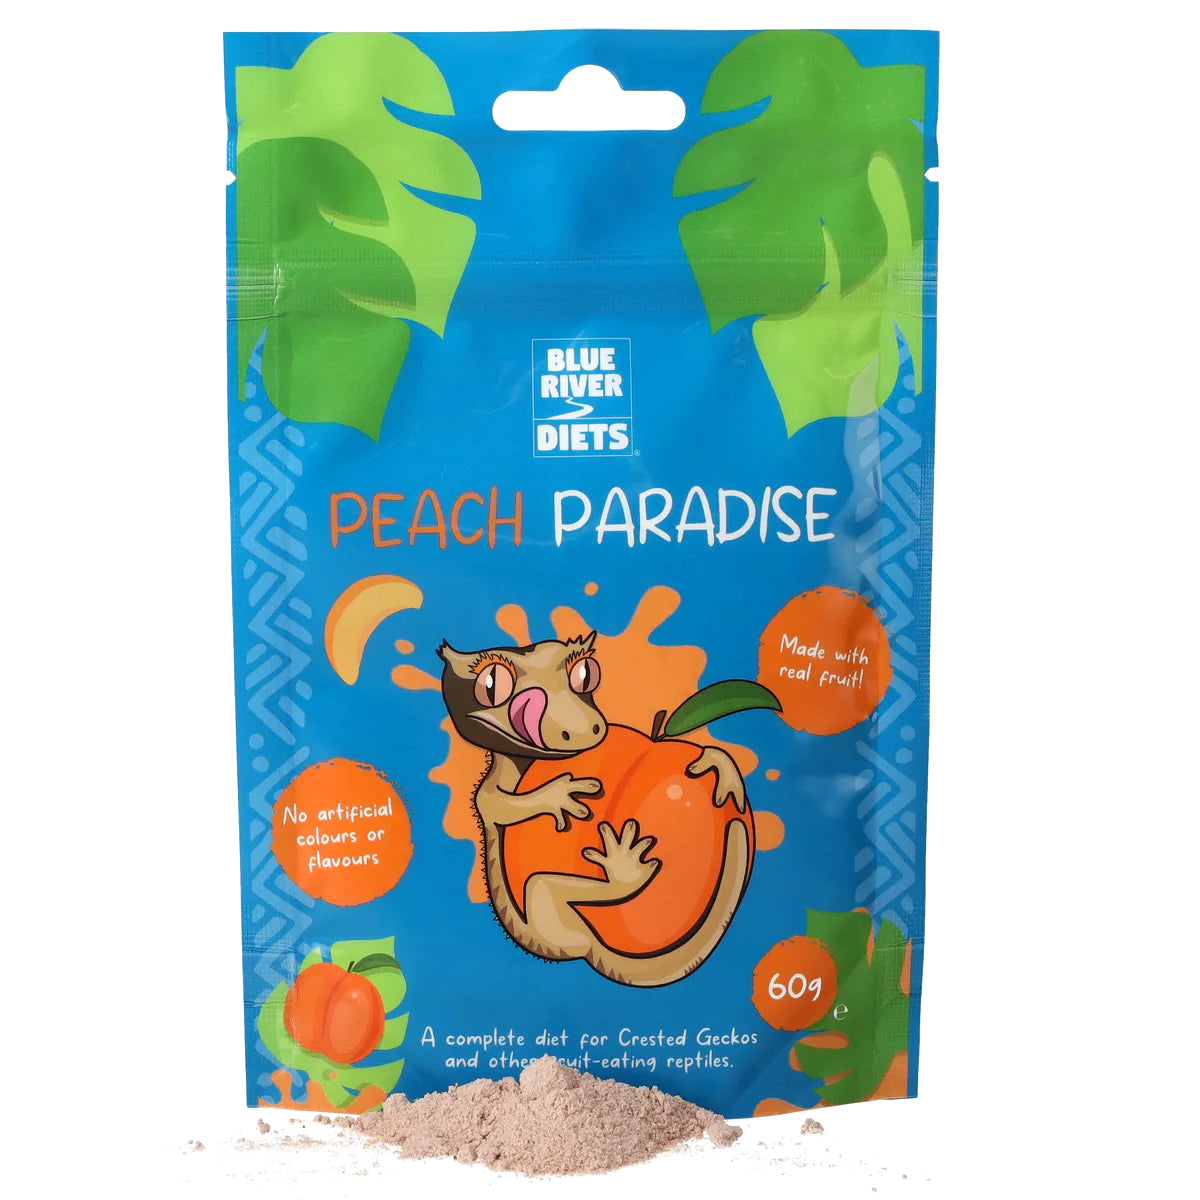 Blue River Diets Peach Paradise Gecko Diet 60g